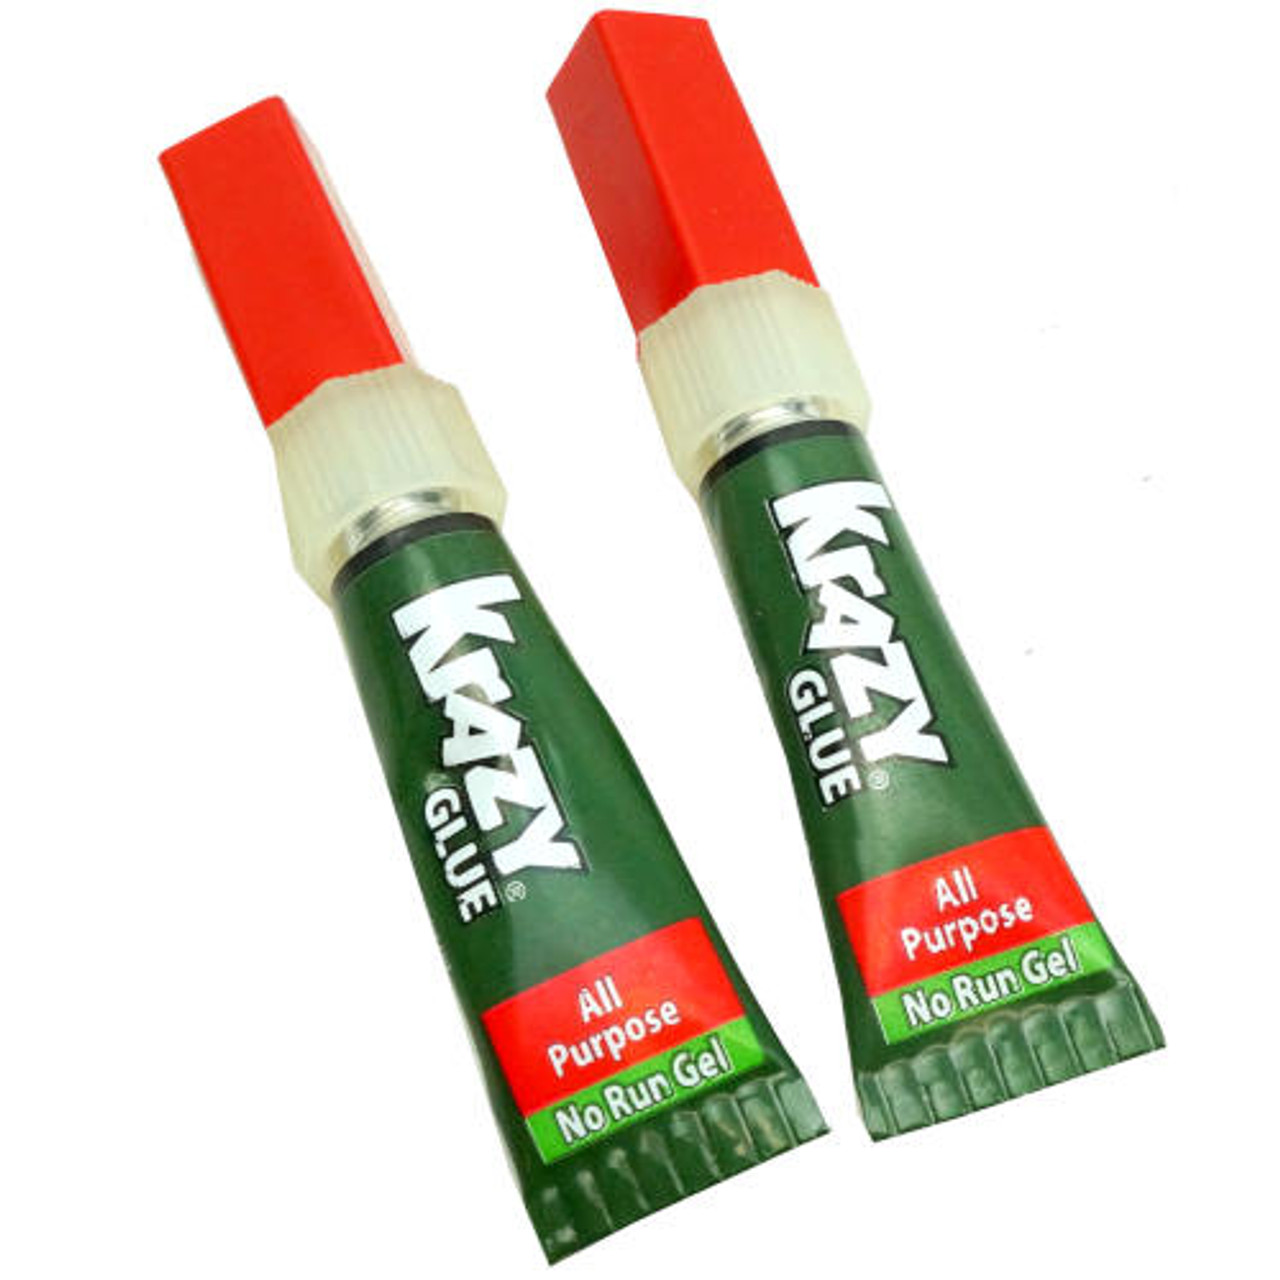 Krazy Glue Super Glue, All Purpose, No Run Gel, Precision Tip - 0.07 oz